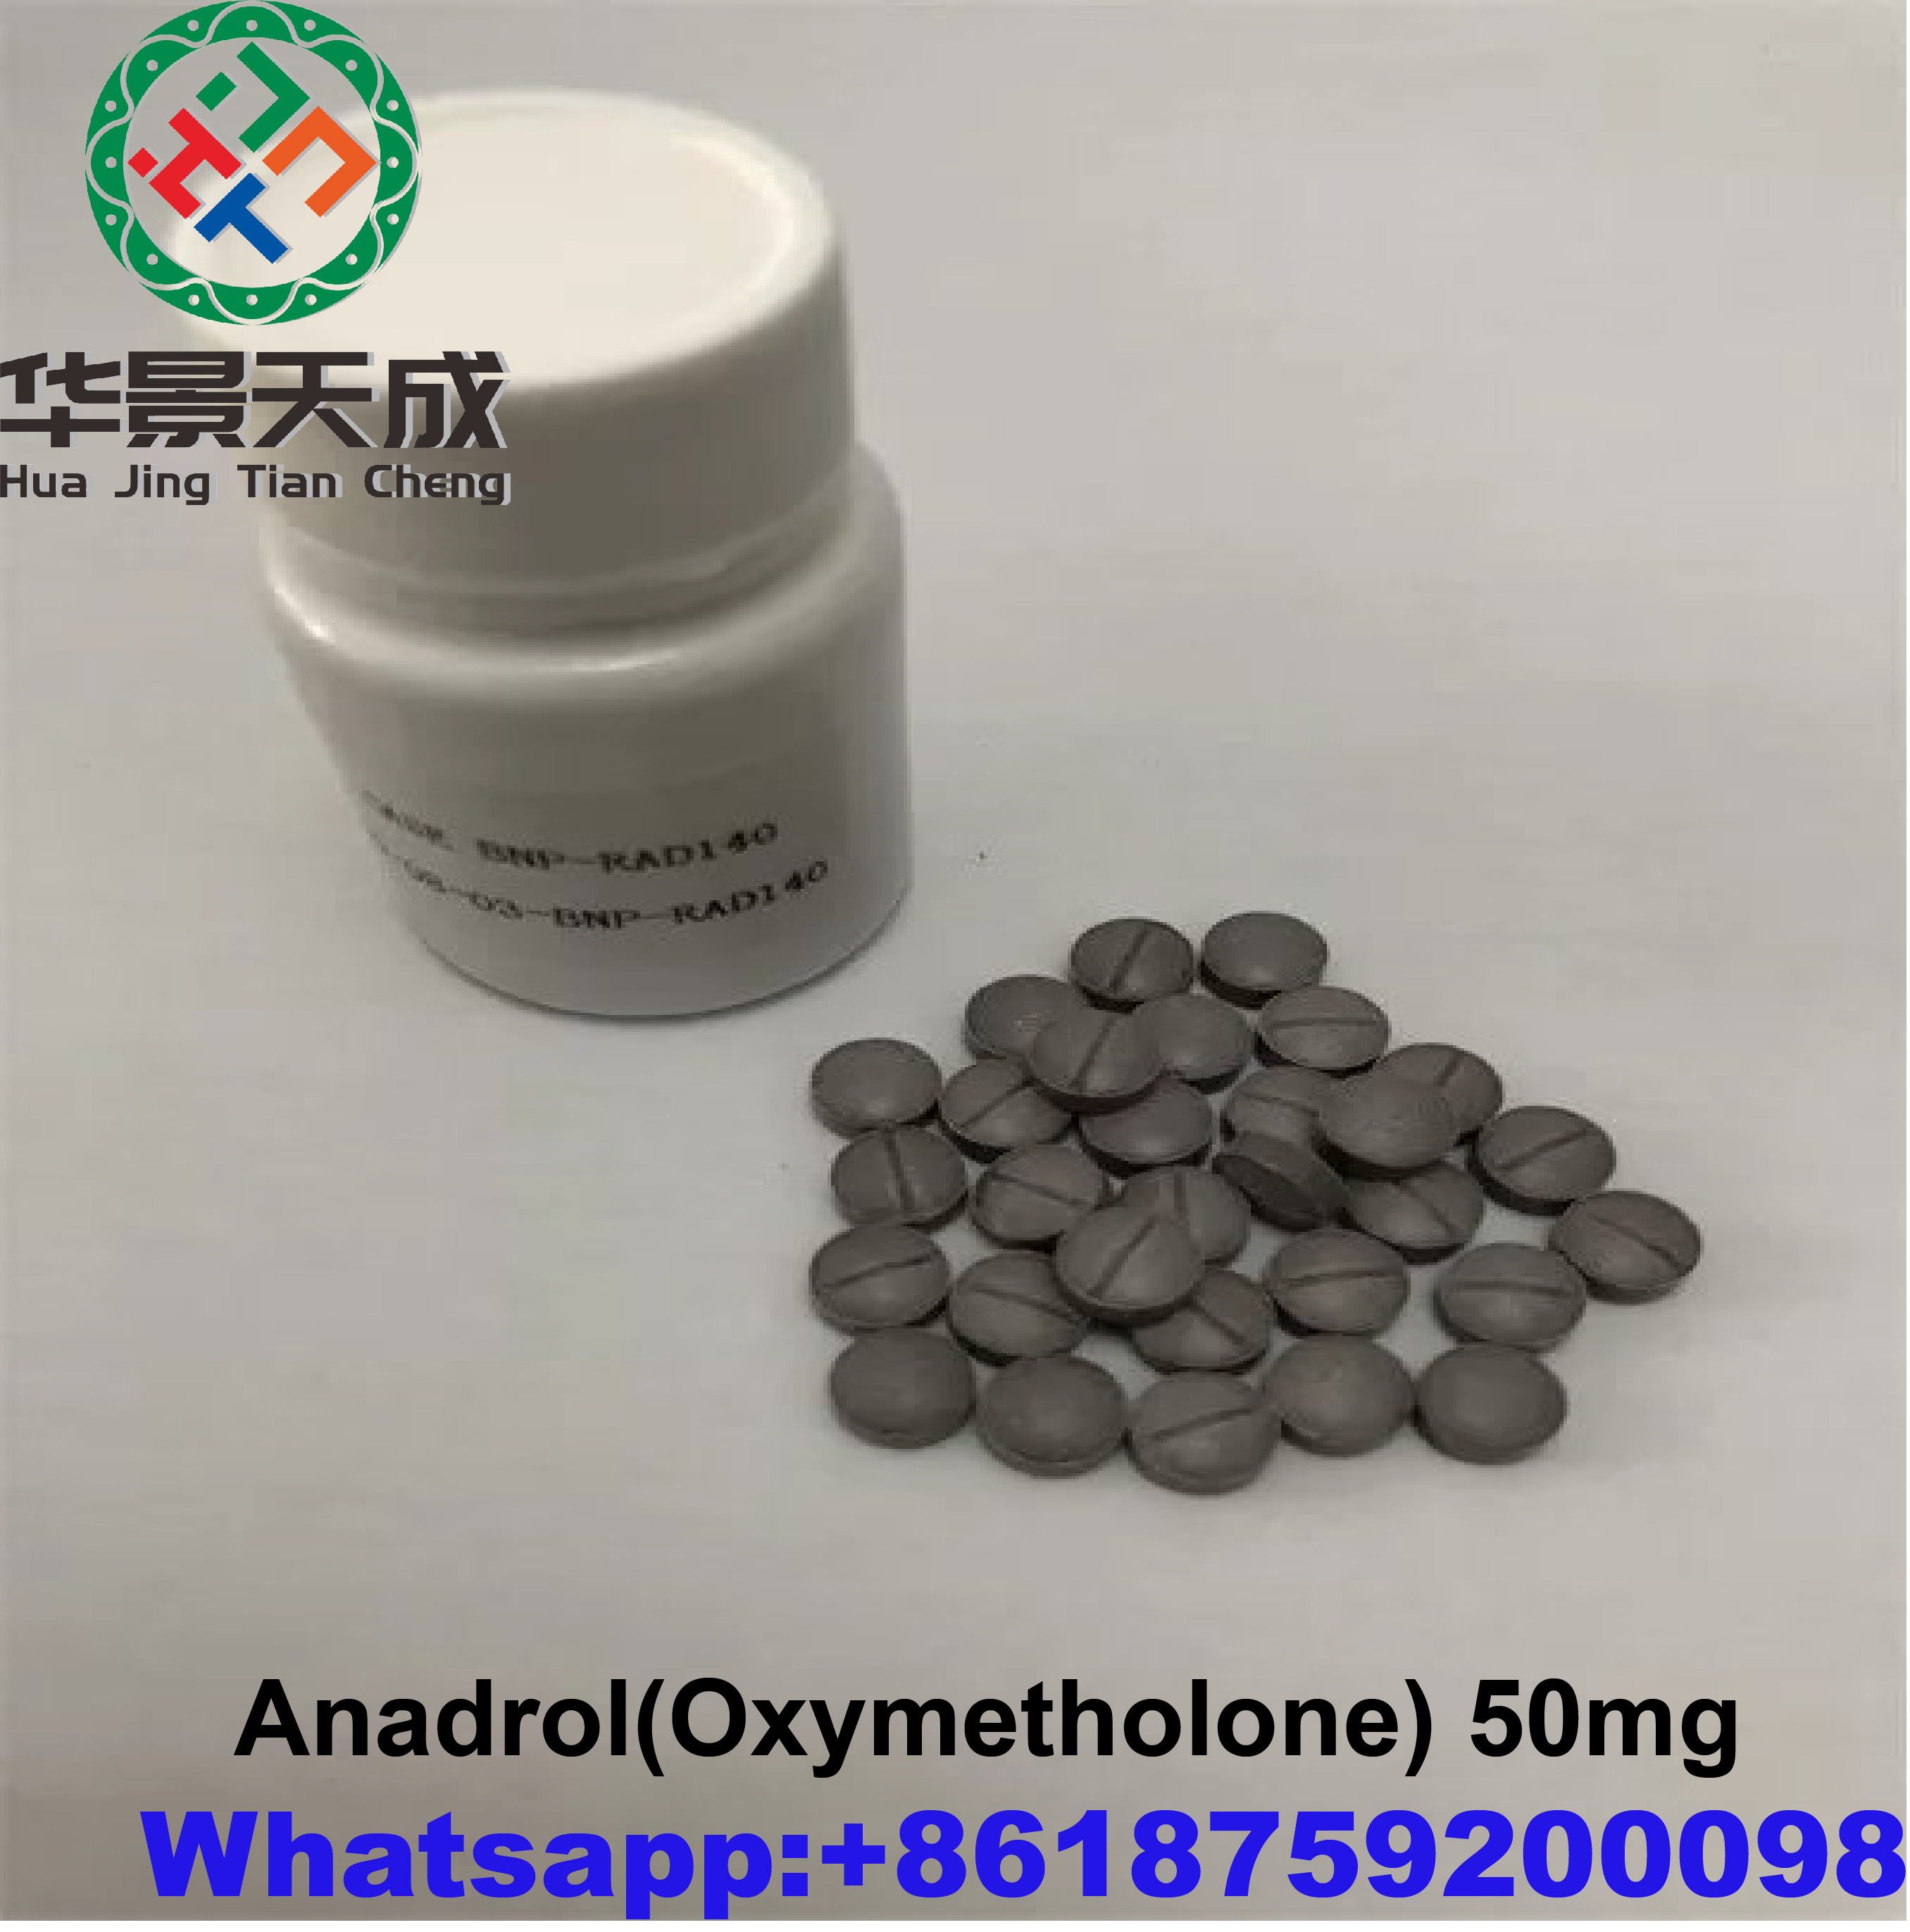 Oral Baboon-Pharma Anadrol 50mg 100 Tablets Fat-Burning alang sa Athlete Oxymetholone 50mg * 100/botelya Featured Image